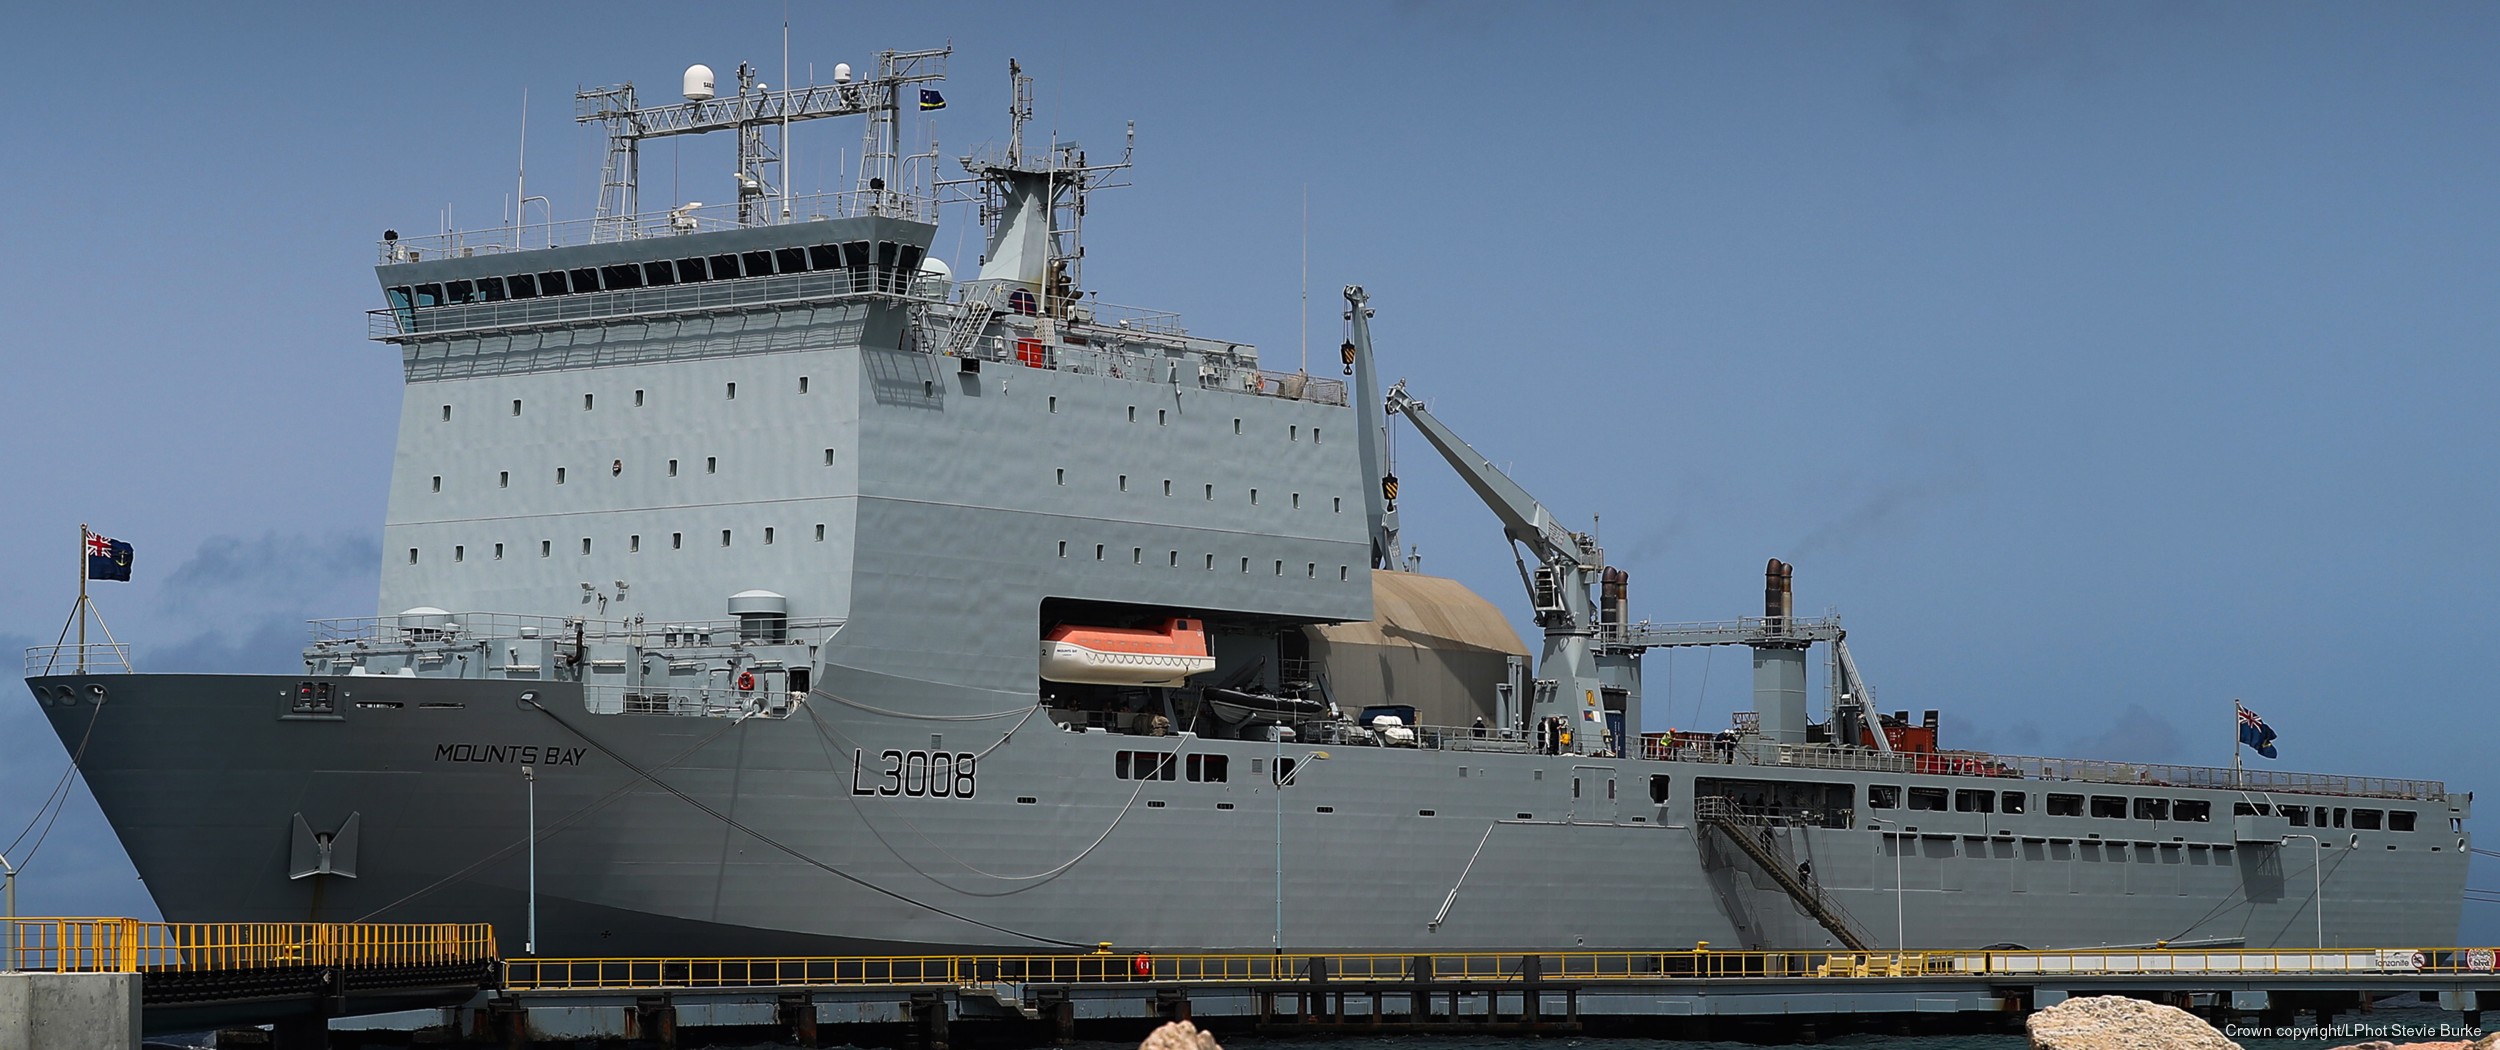 l-3008 rfa mounts bay dock landing ship lsd royal fleet auxilary navy 27